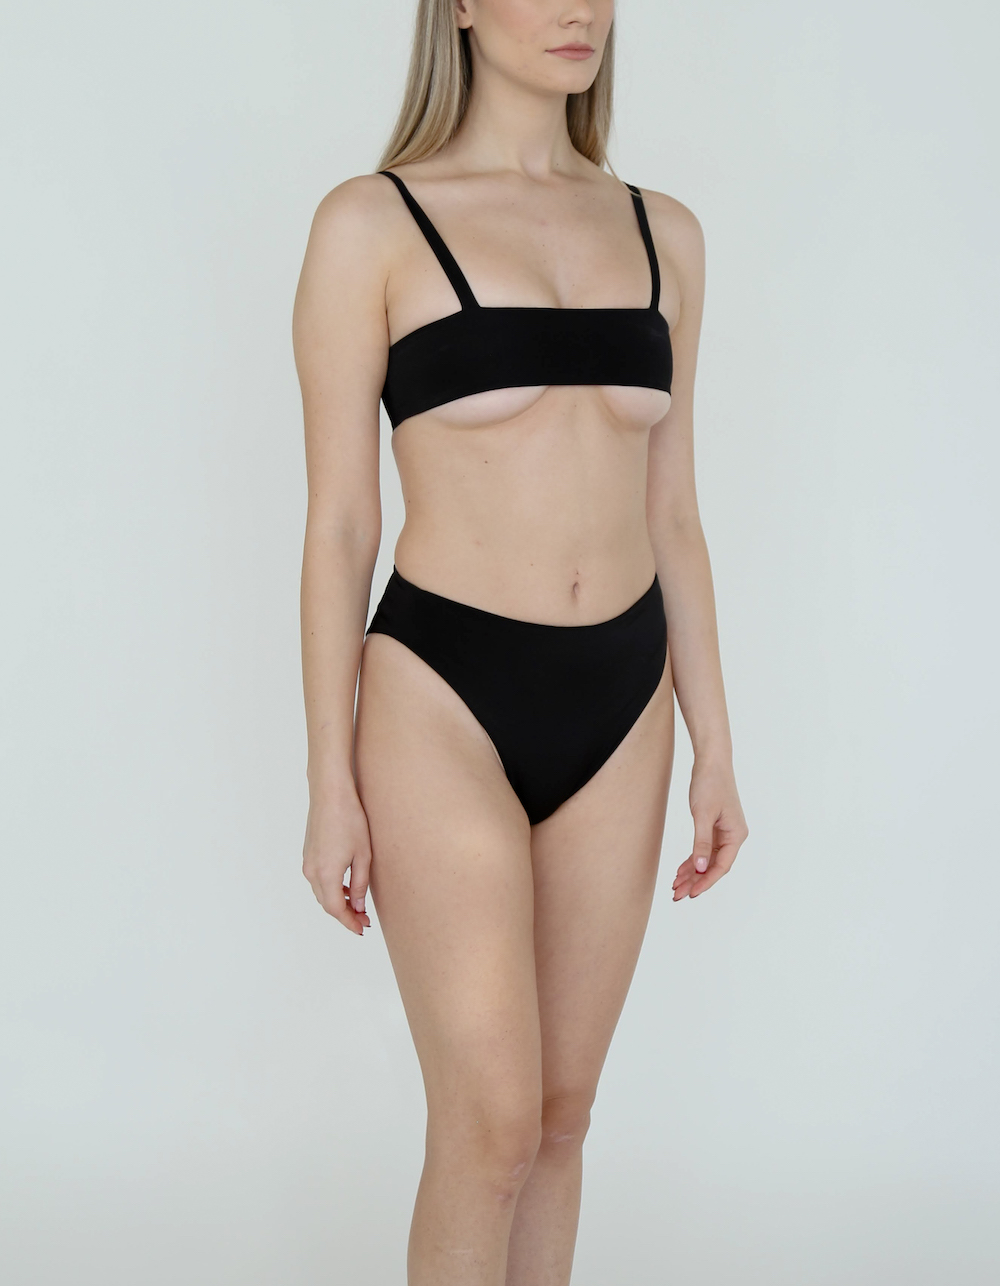 Plain Jane - Black Bikini Set (FINAL SALE)